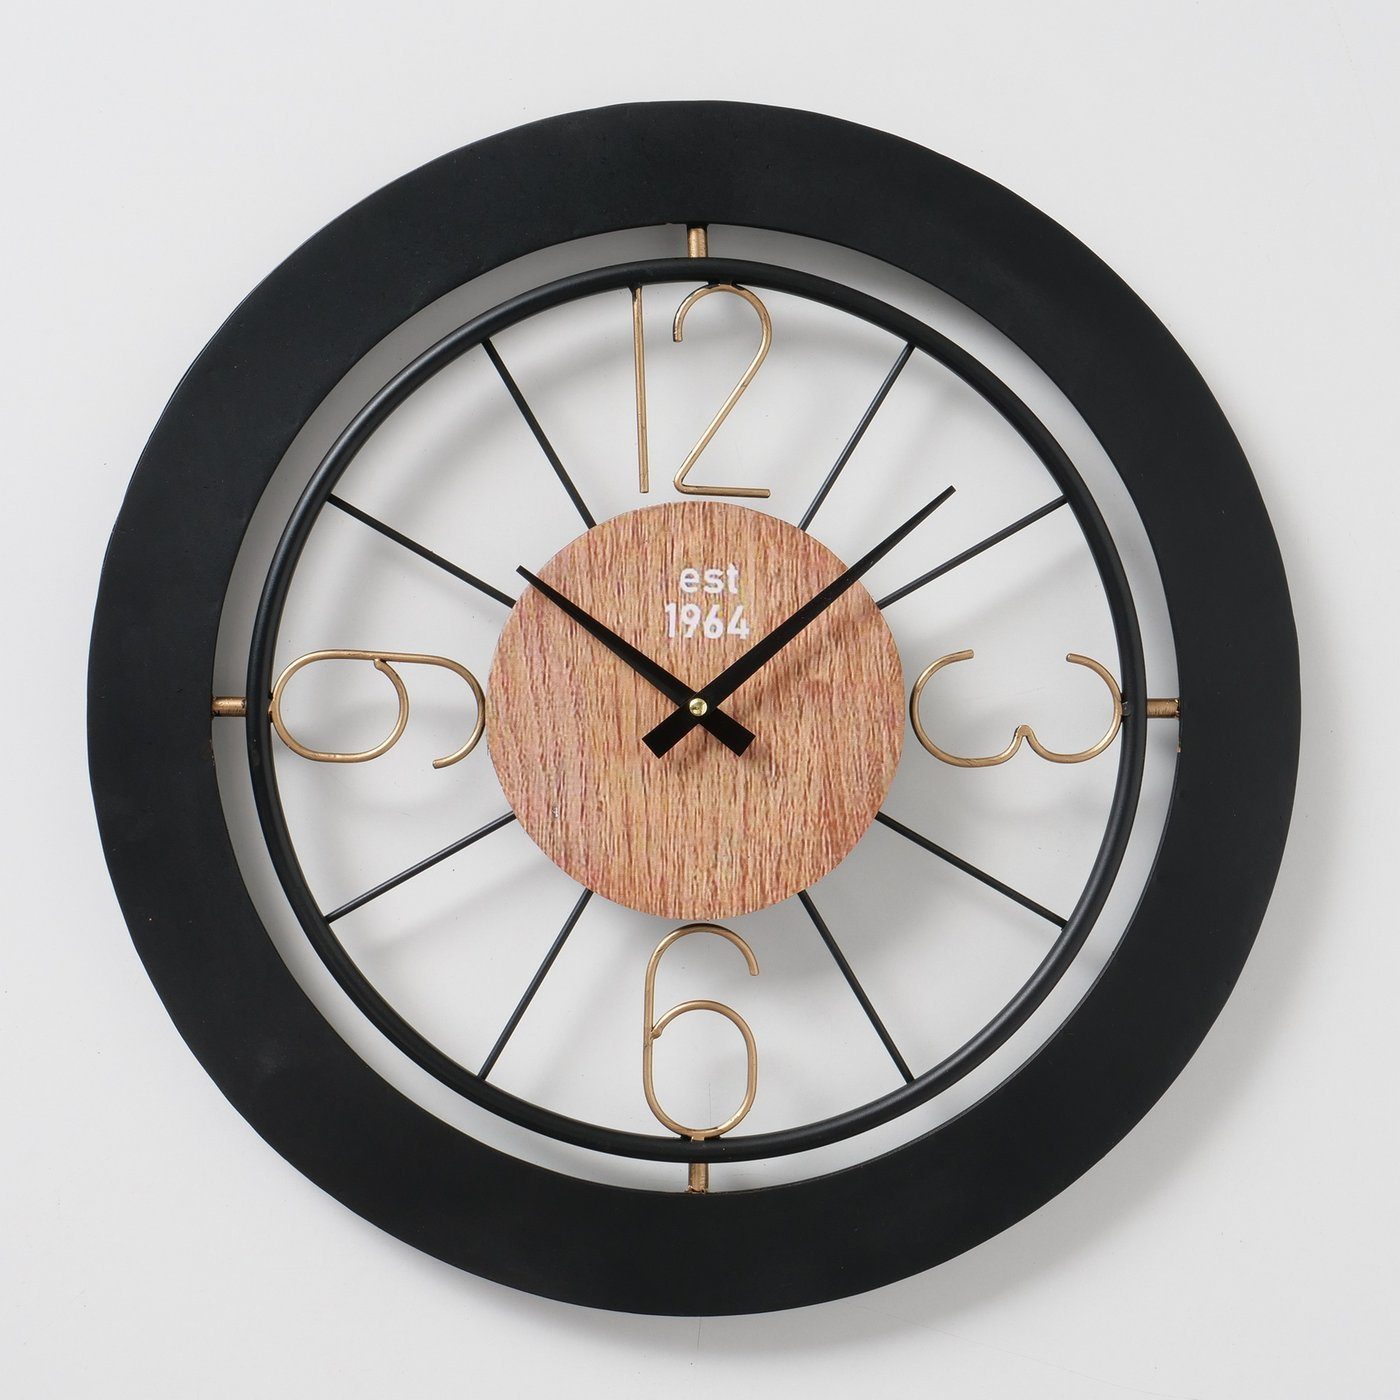 BOLTZE Wanduhr "Rilana" aus Holz/Metall in schwarz/gold/braun B50cm, Uhr | Wanduhren